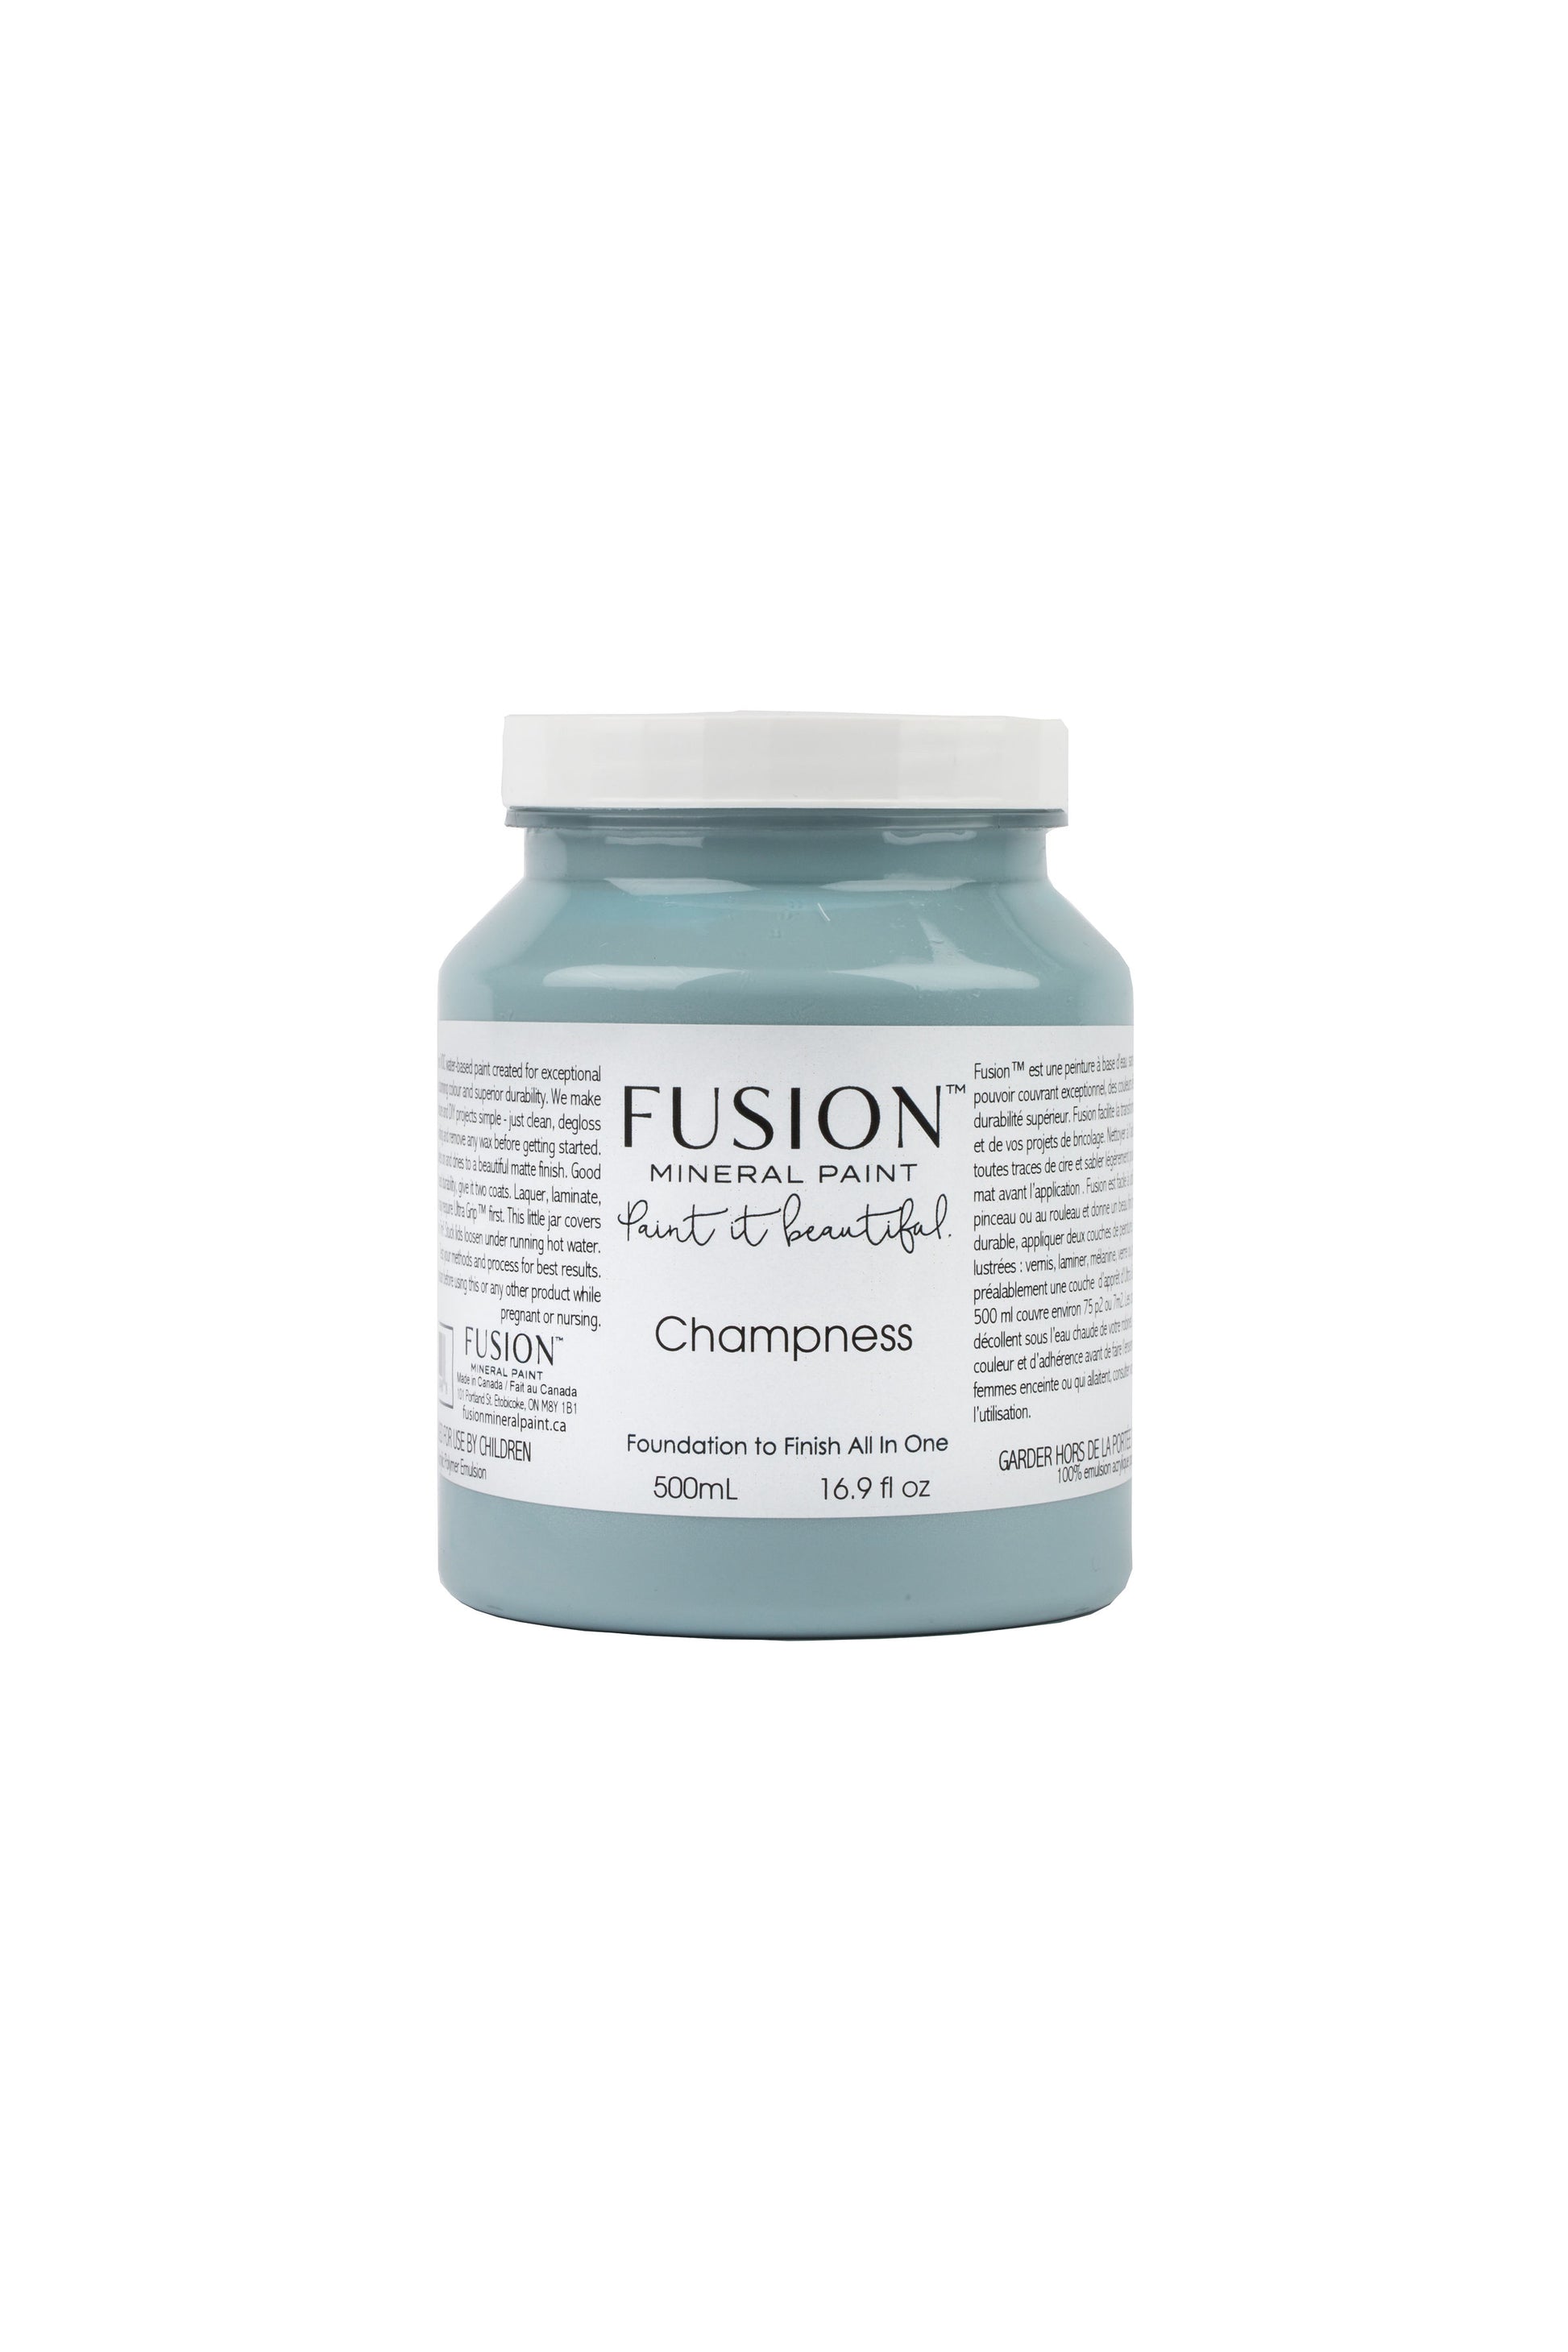 Champness Fusion Mineral Paint, Light Blue Paint Color | 500ml Pint Size